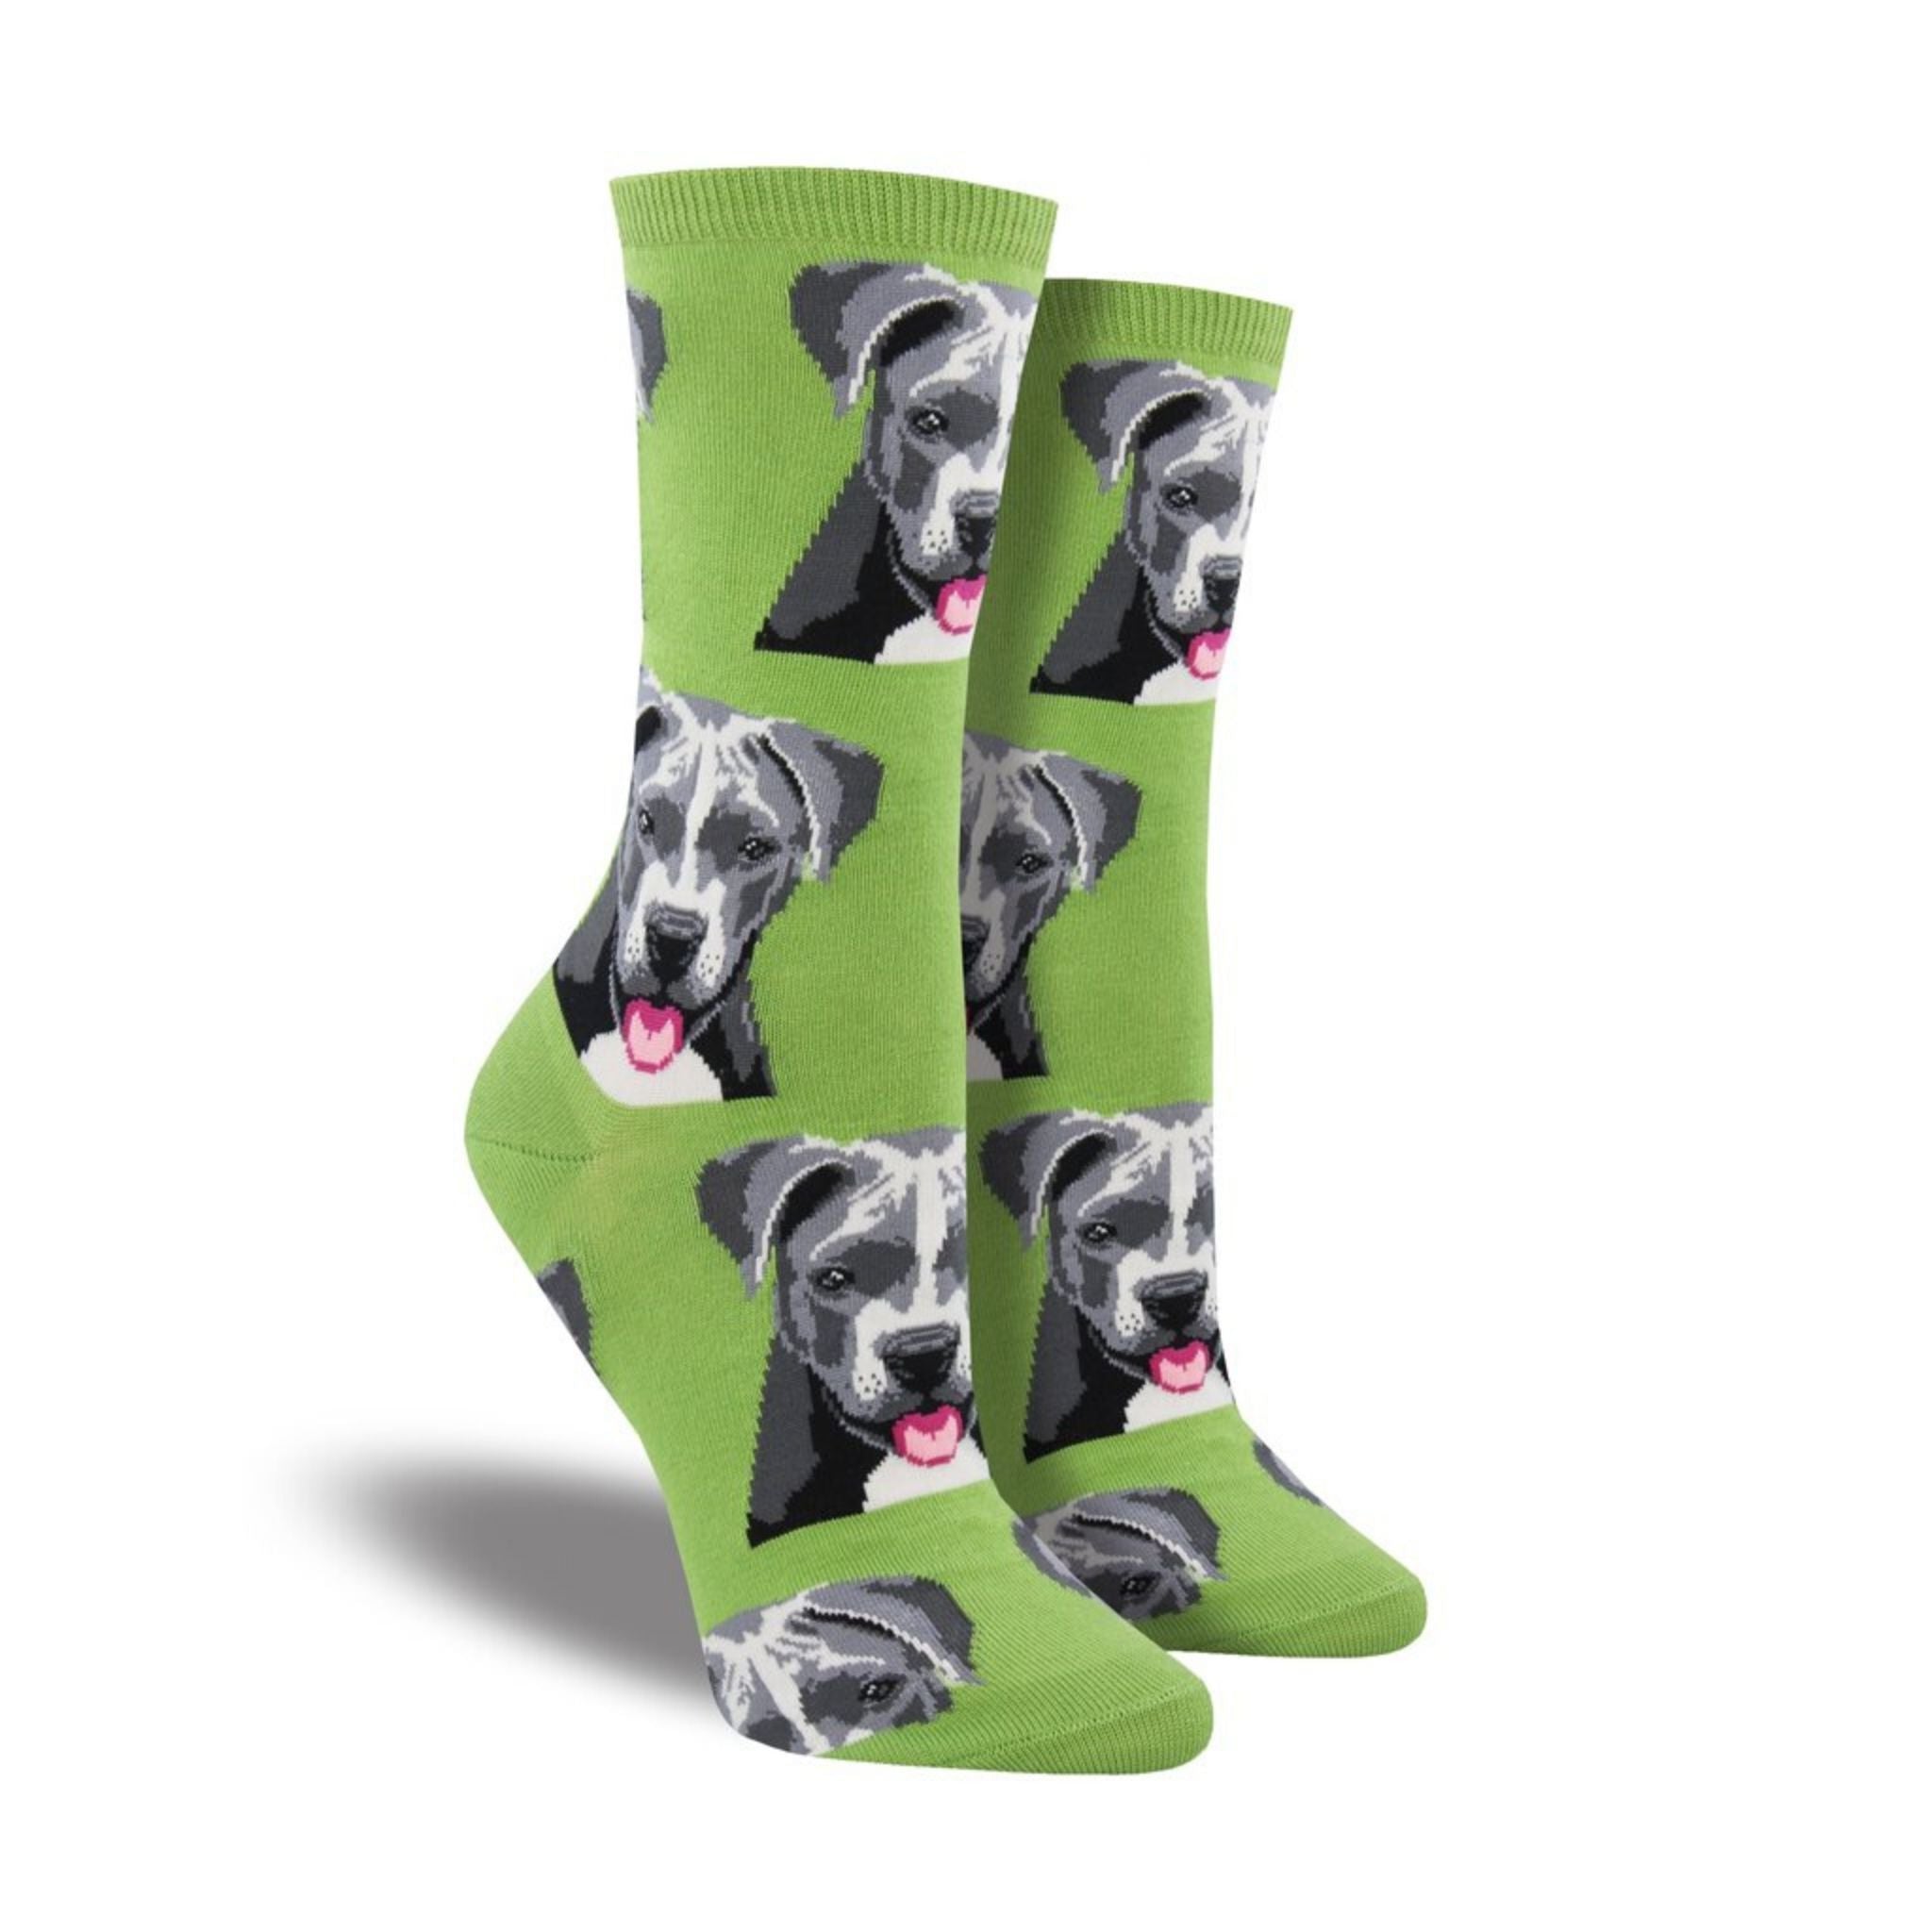 Green socks with pitbulls on them